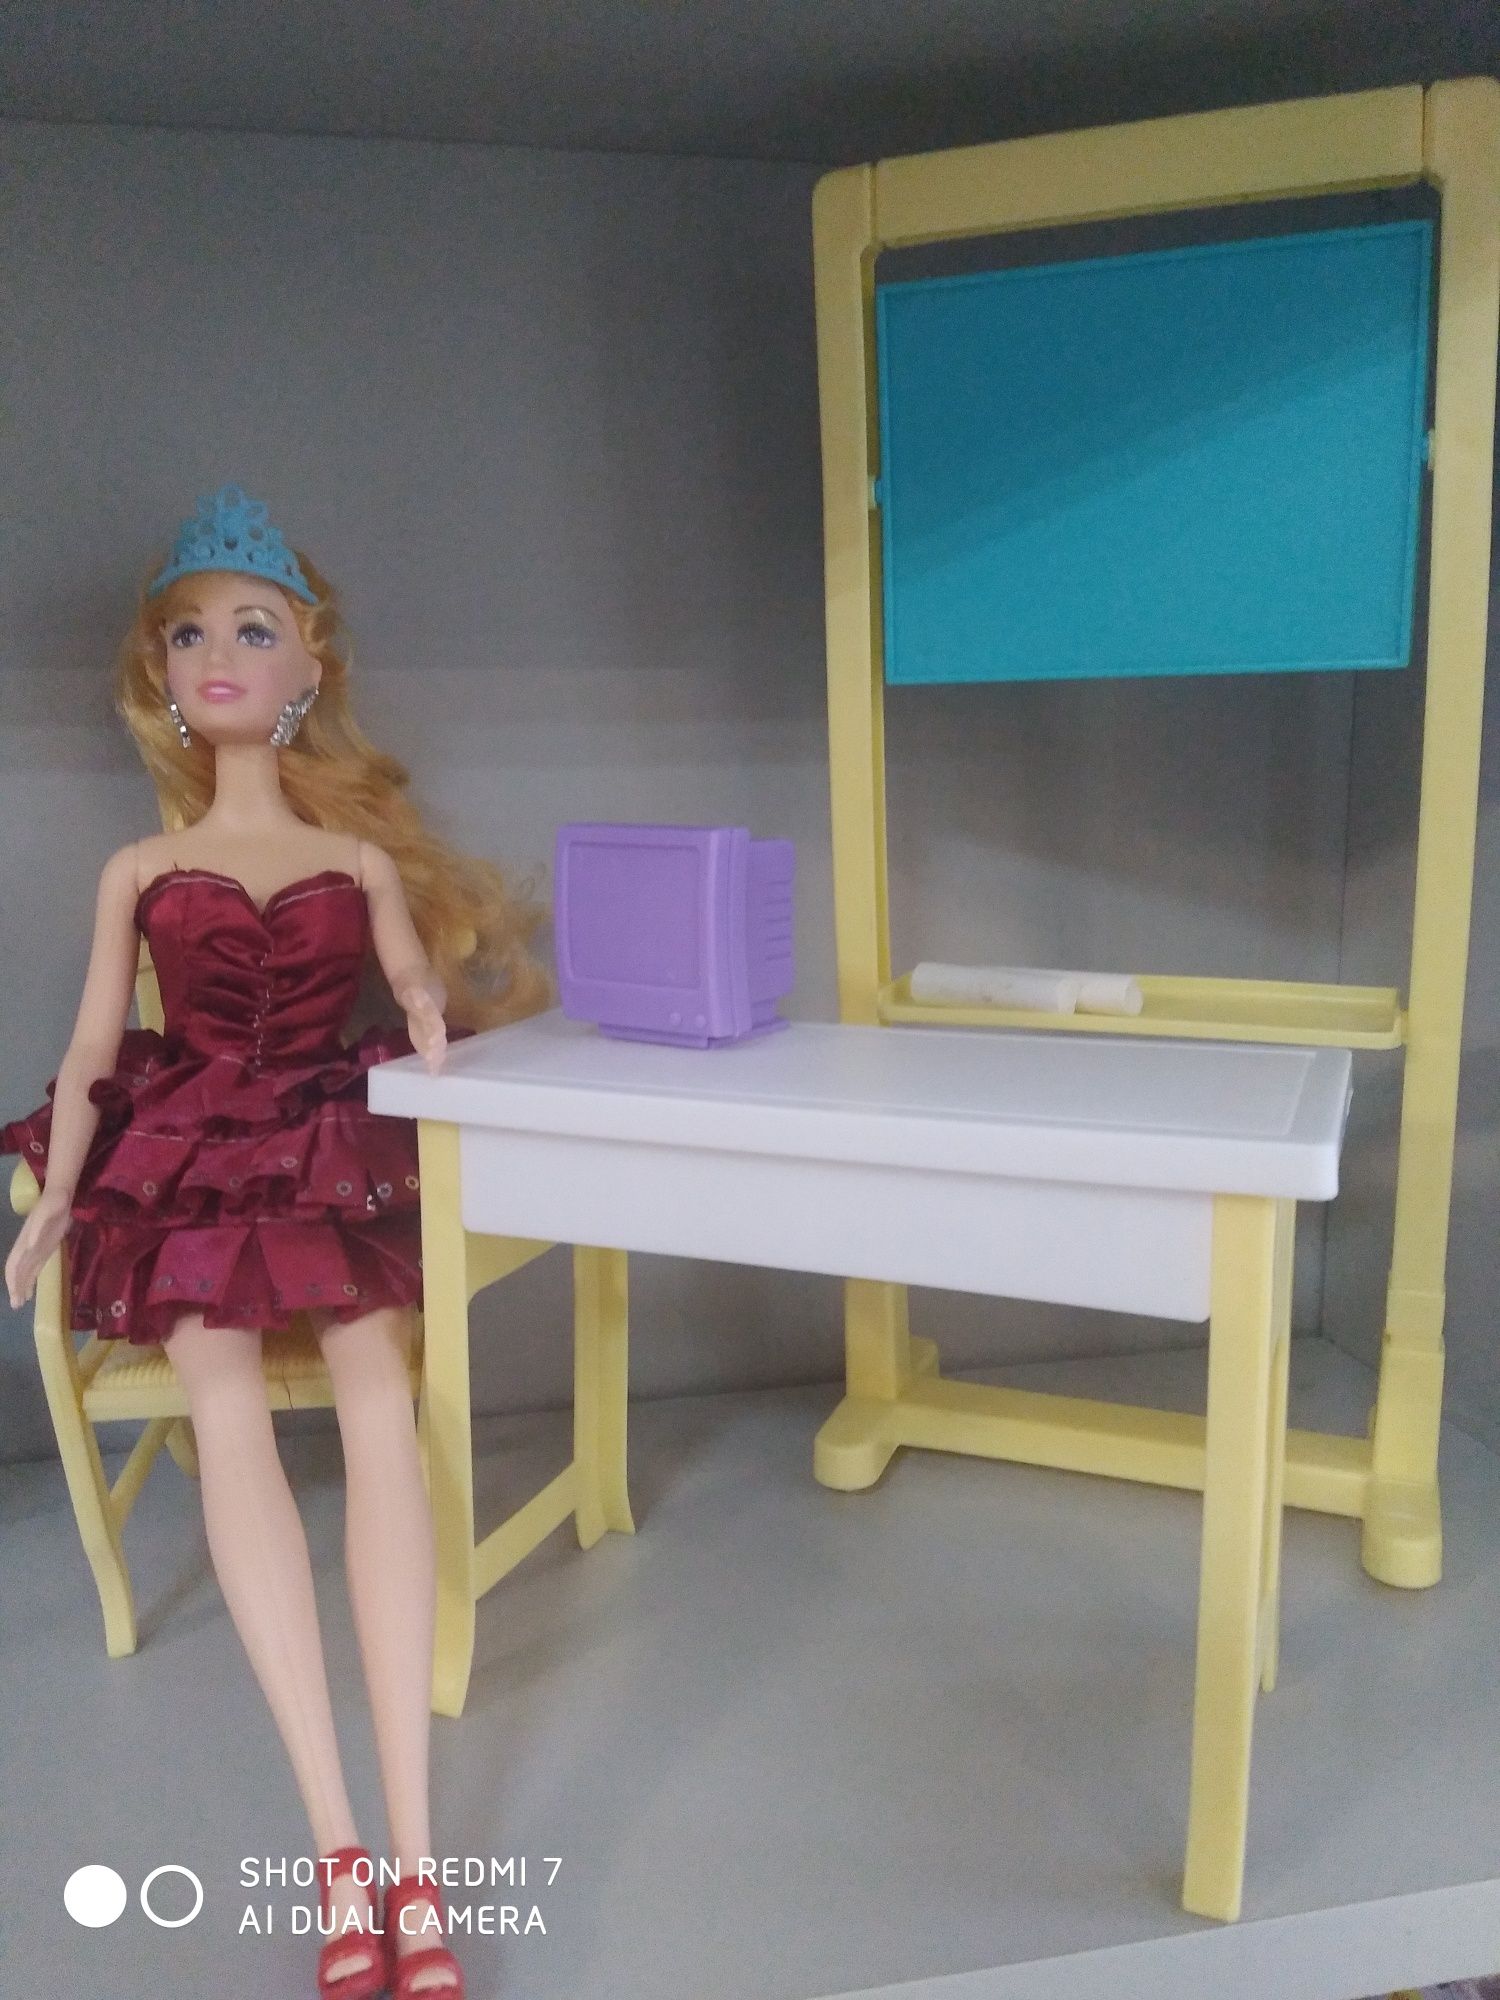 Меблі для ляльок Барбі и ЛОЛ, Мебель для кукол Барби